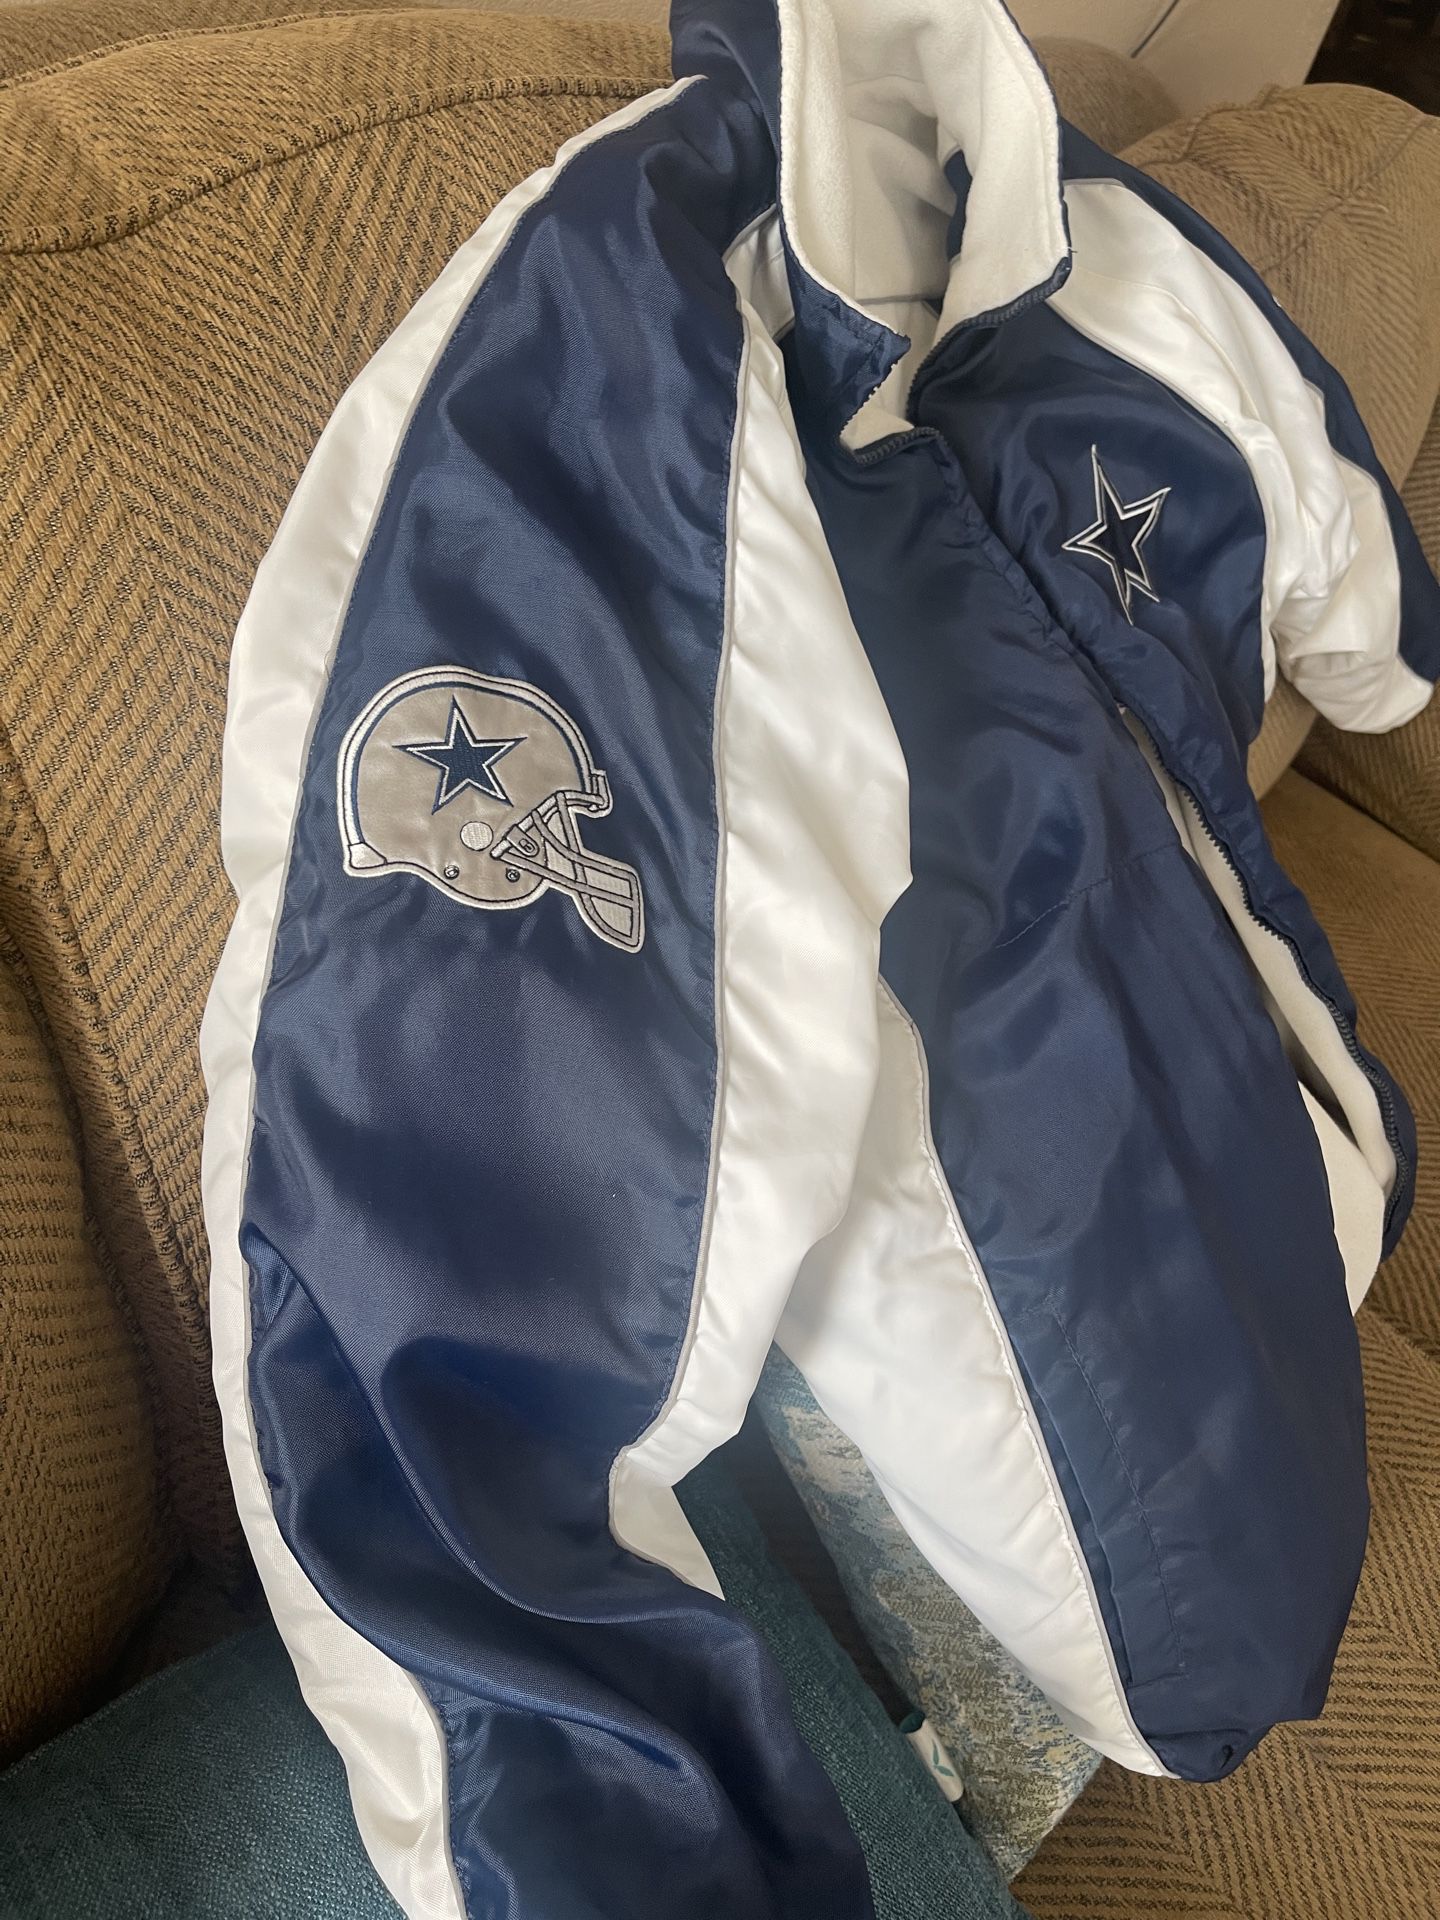 Vintage 90s Dallas Cowboys Starter Jacket for Sale in Ontario, CA - OfferUp